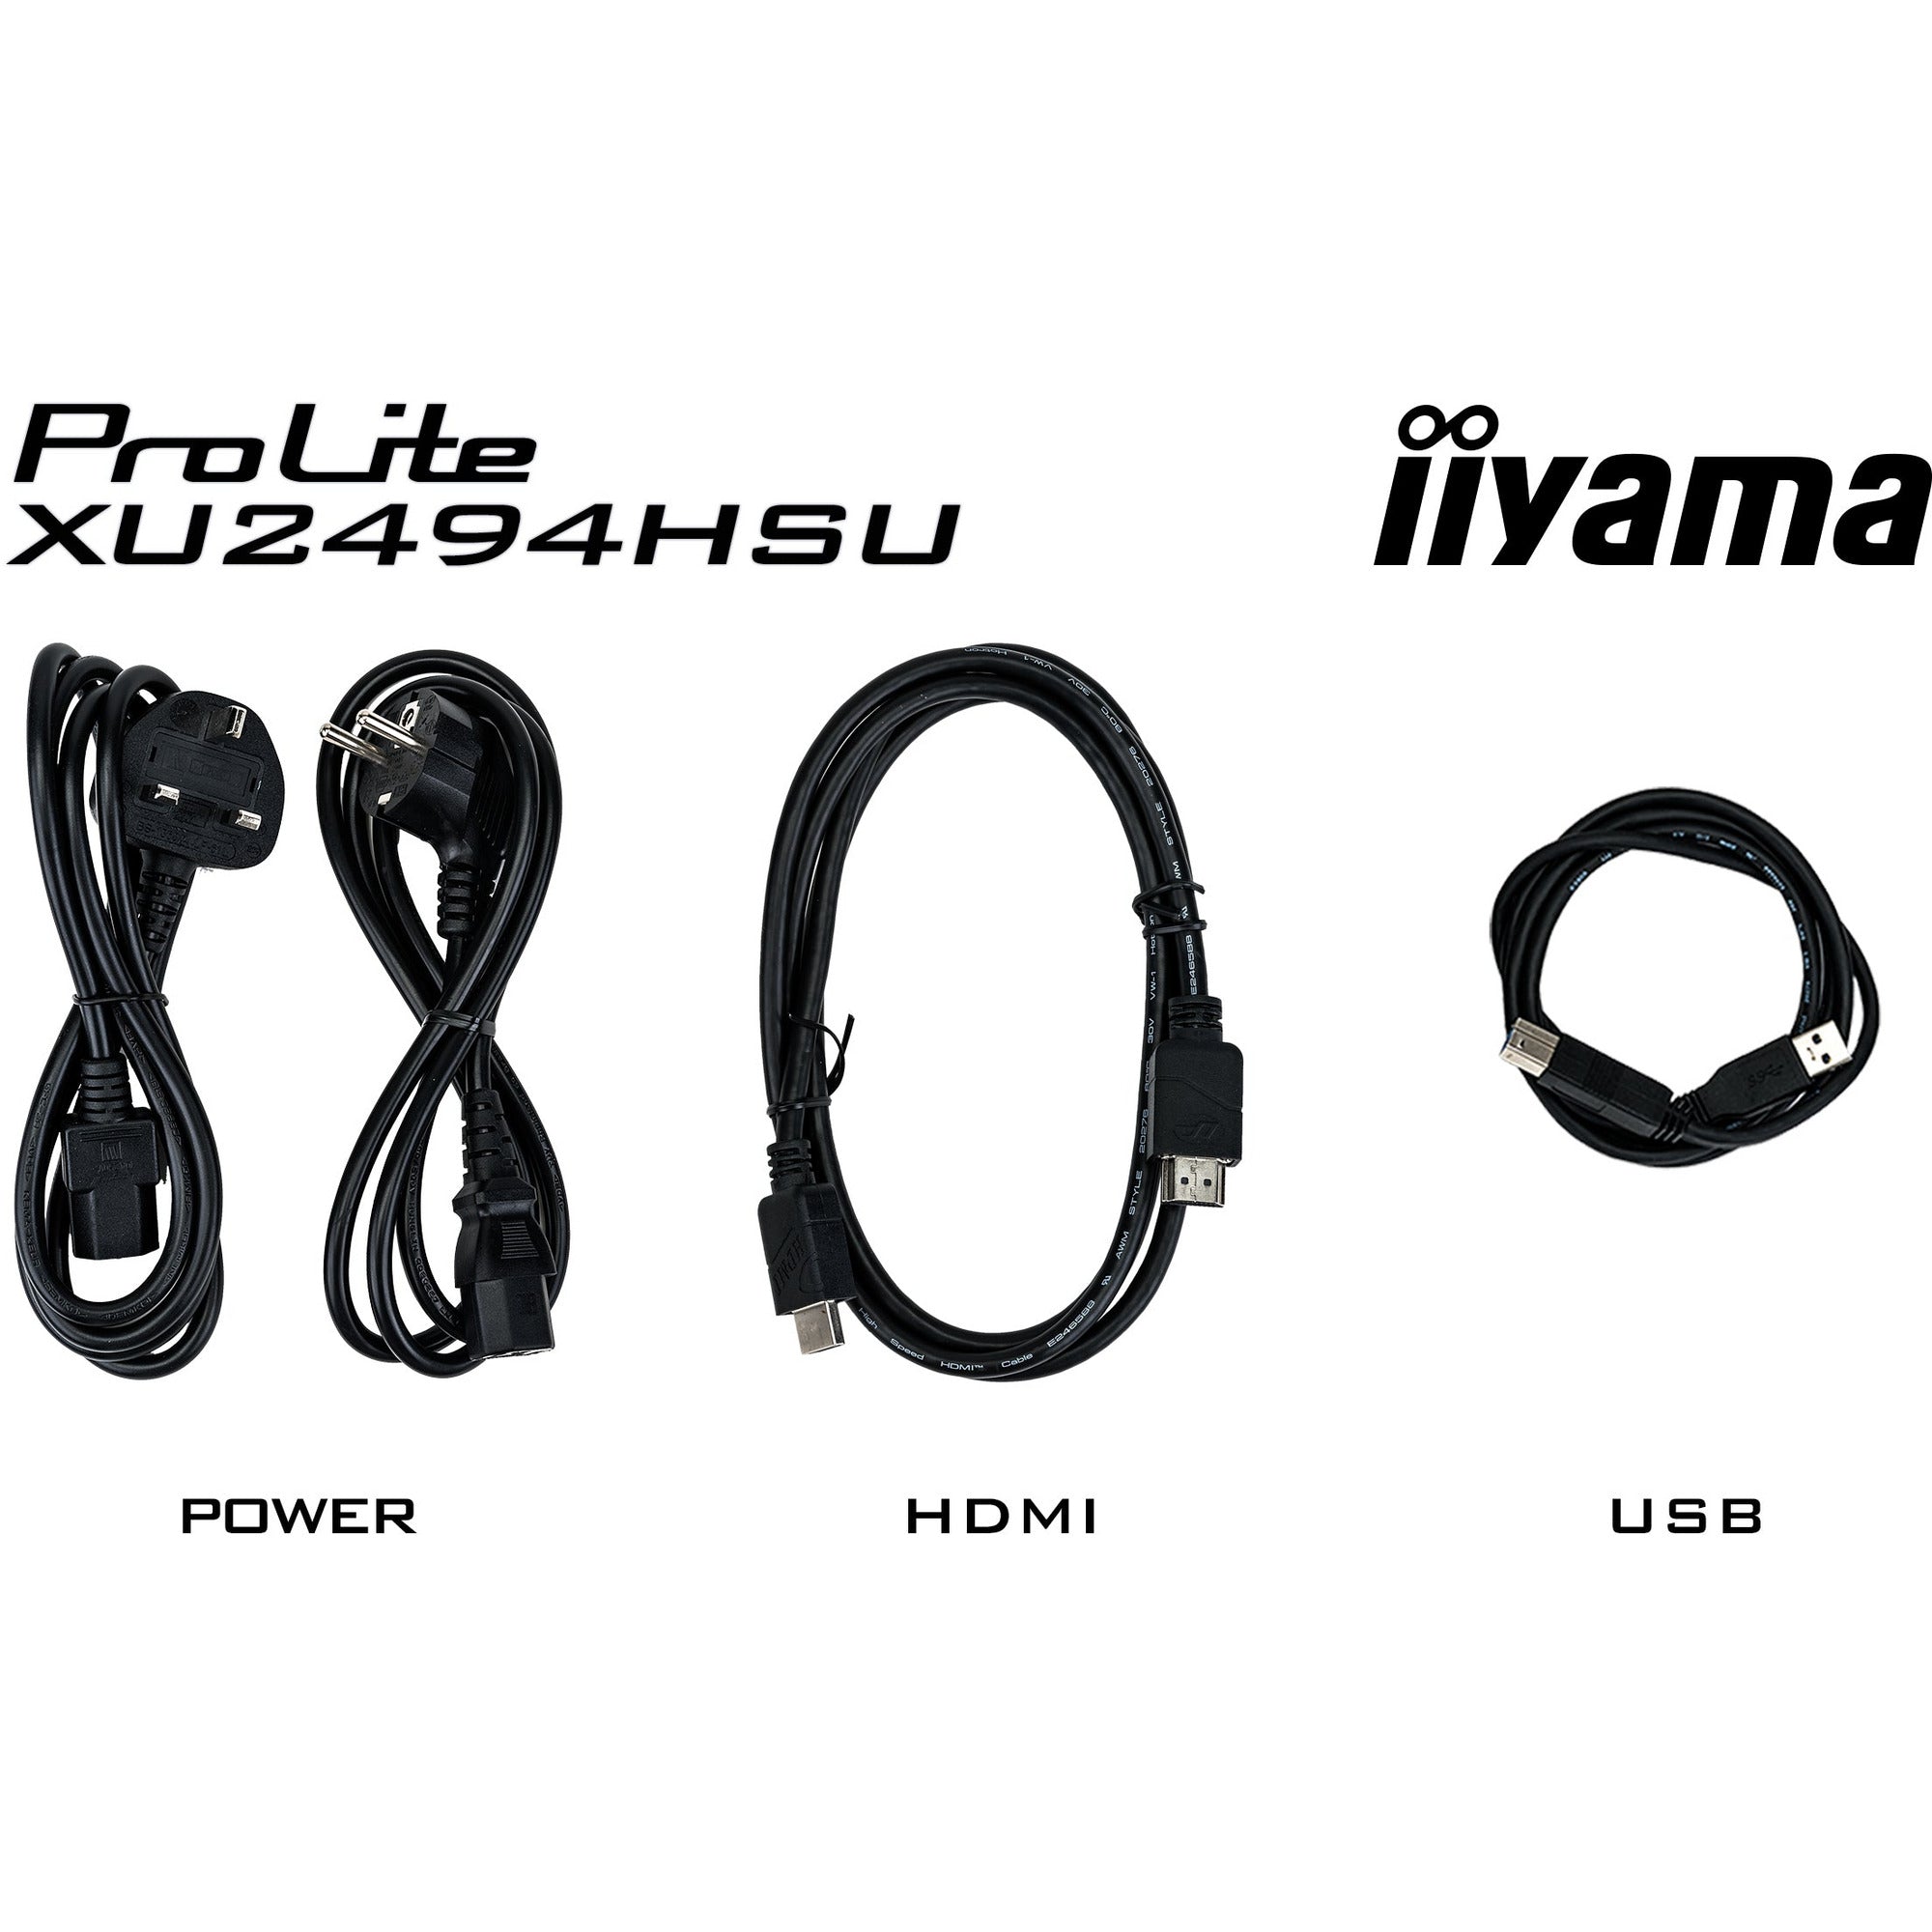 Iiyama ProLite XU2494HSU-B2 24” Full HD VA monitor with Fixed Stand